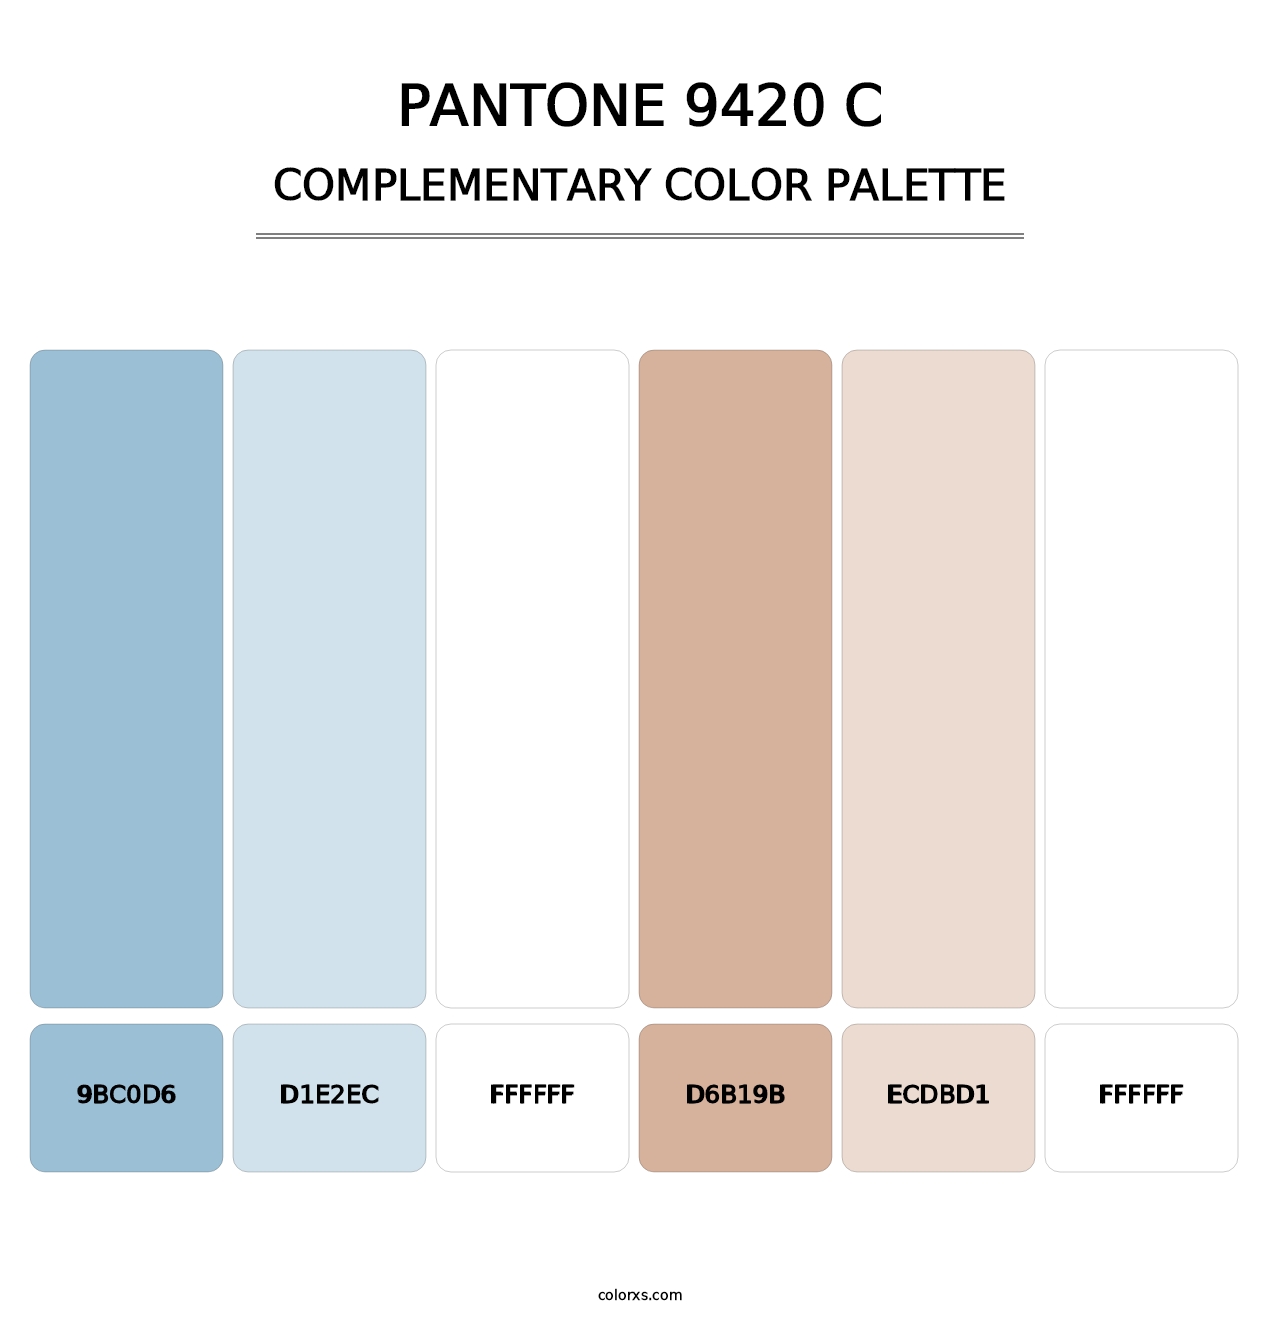 PANTONE 9420 C - Complementary Color Palette